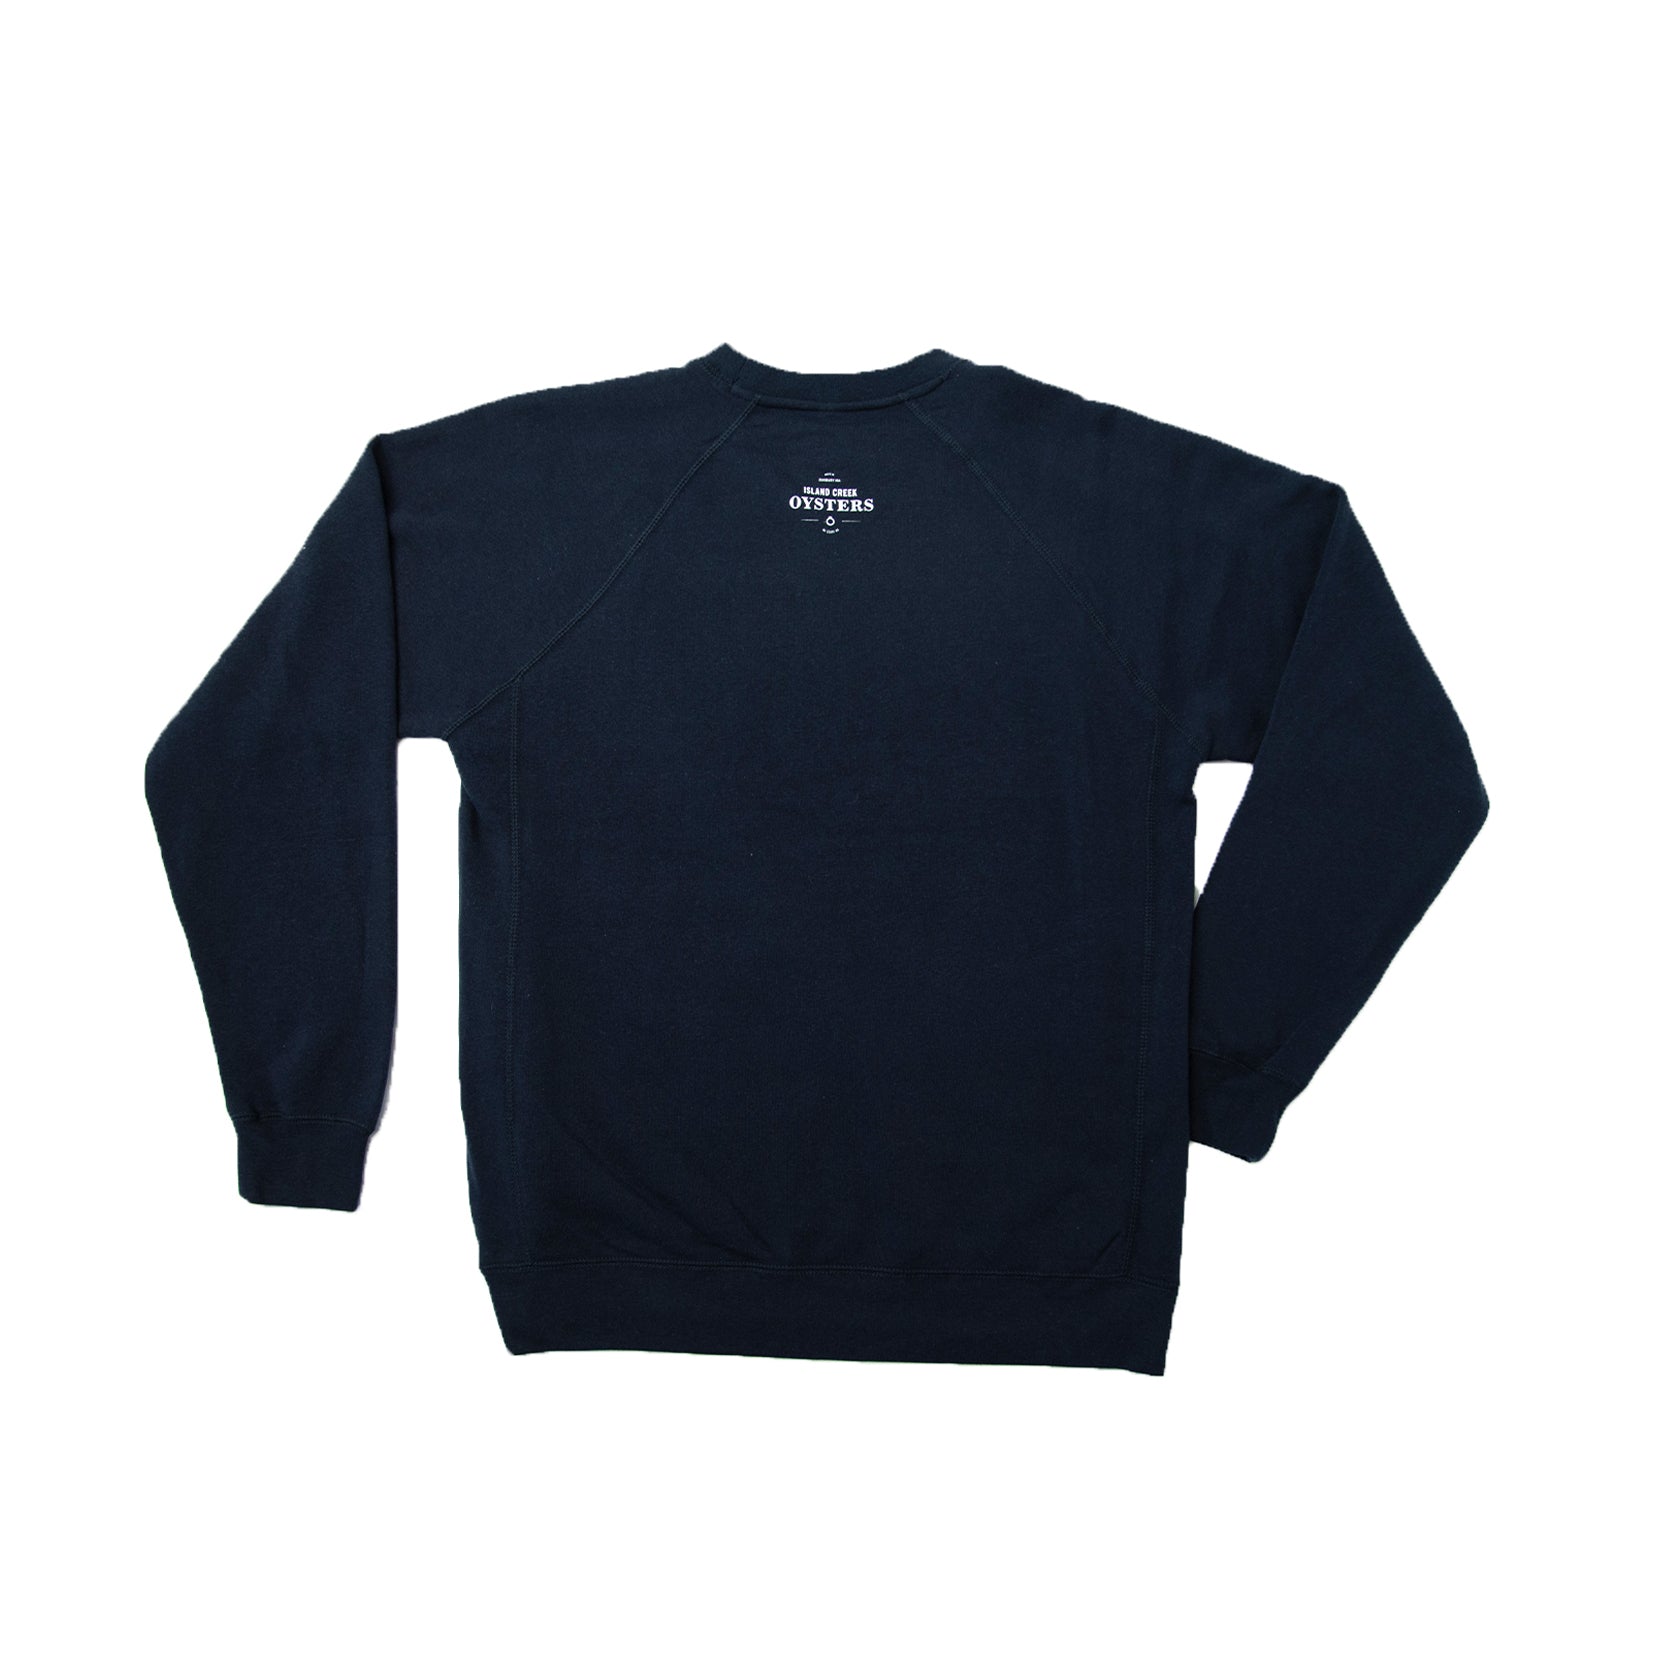 ICO Oysters Navy Crewneck Sweatshirt 2XL